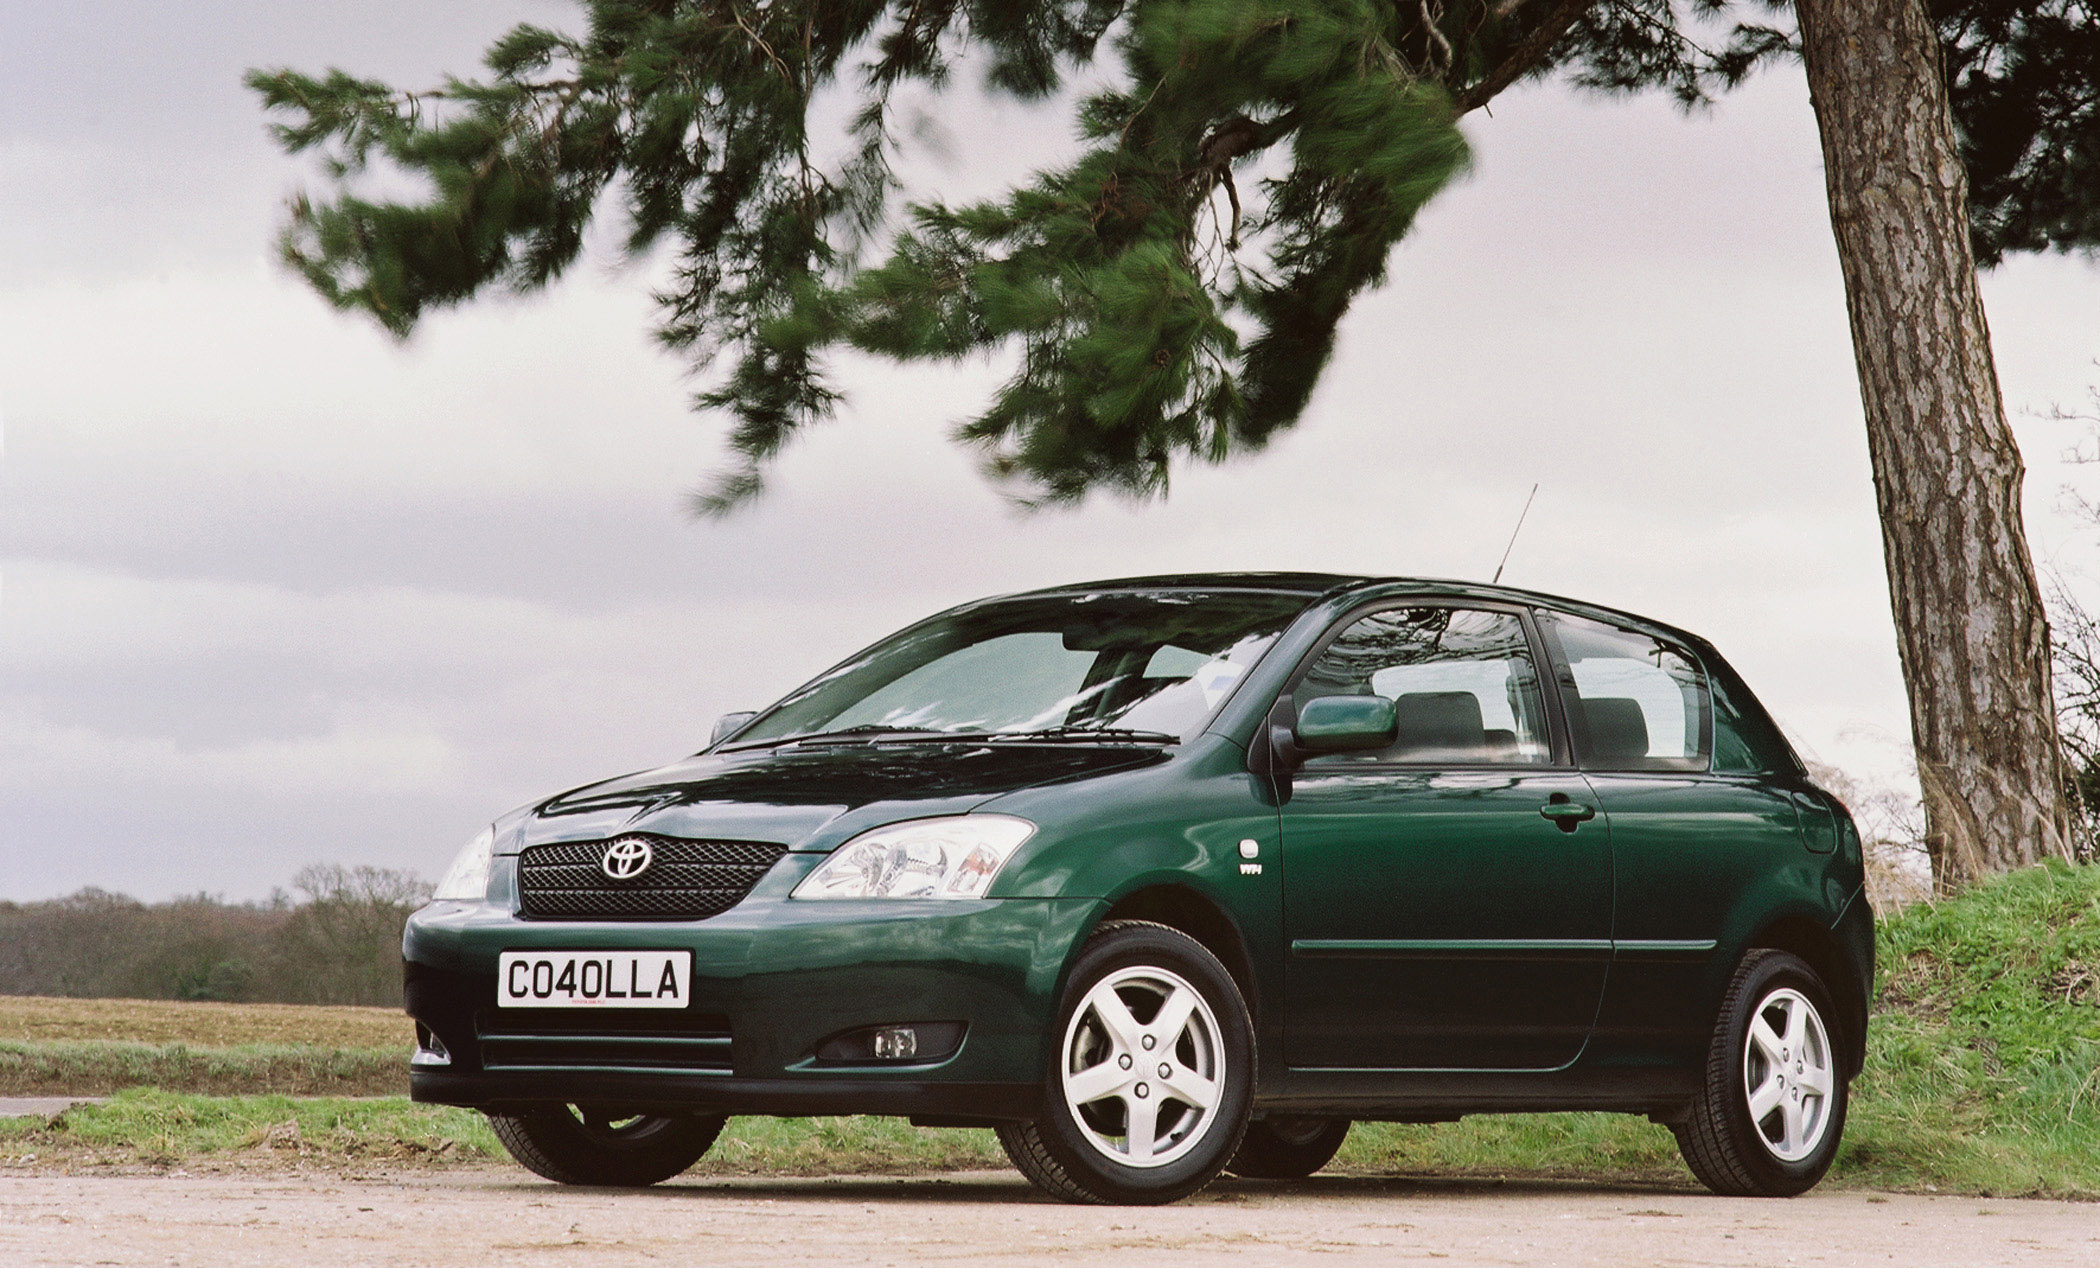 Тойоту 2006 хэтчбек. Toyota Corolla (2004-2006) хэтчбек. Toyota Corolla 2004 хэтчбек. Toyota Corolla 2006 хэтчбек. Toyota Corolla 120 хэтчбек 2002-2004.